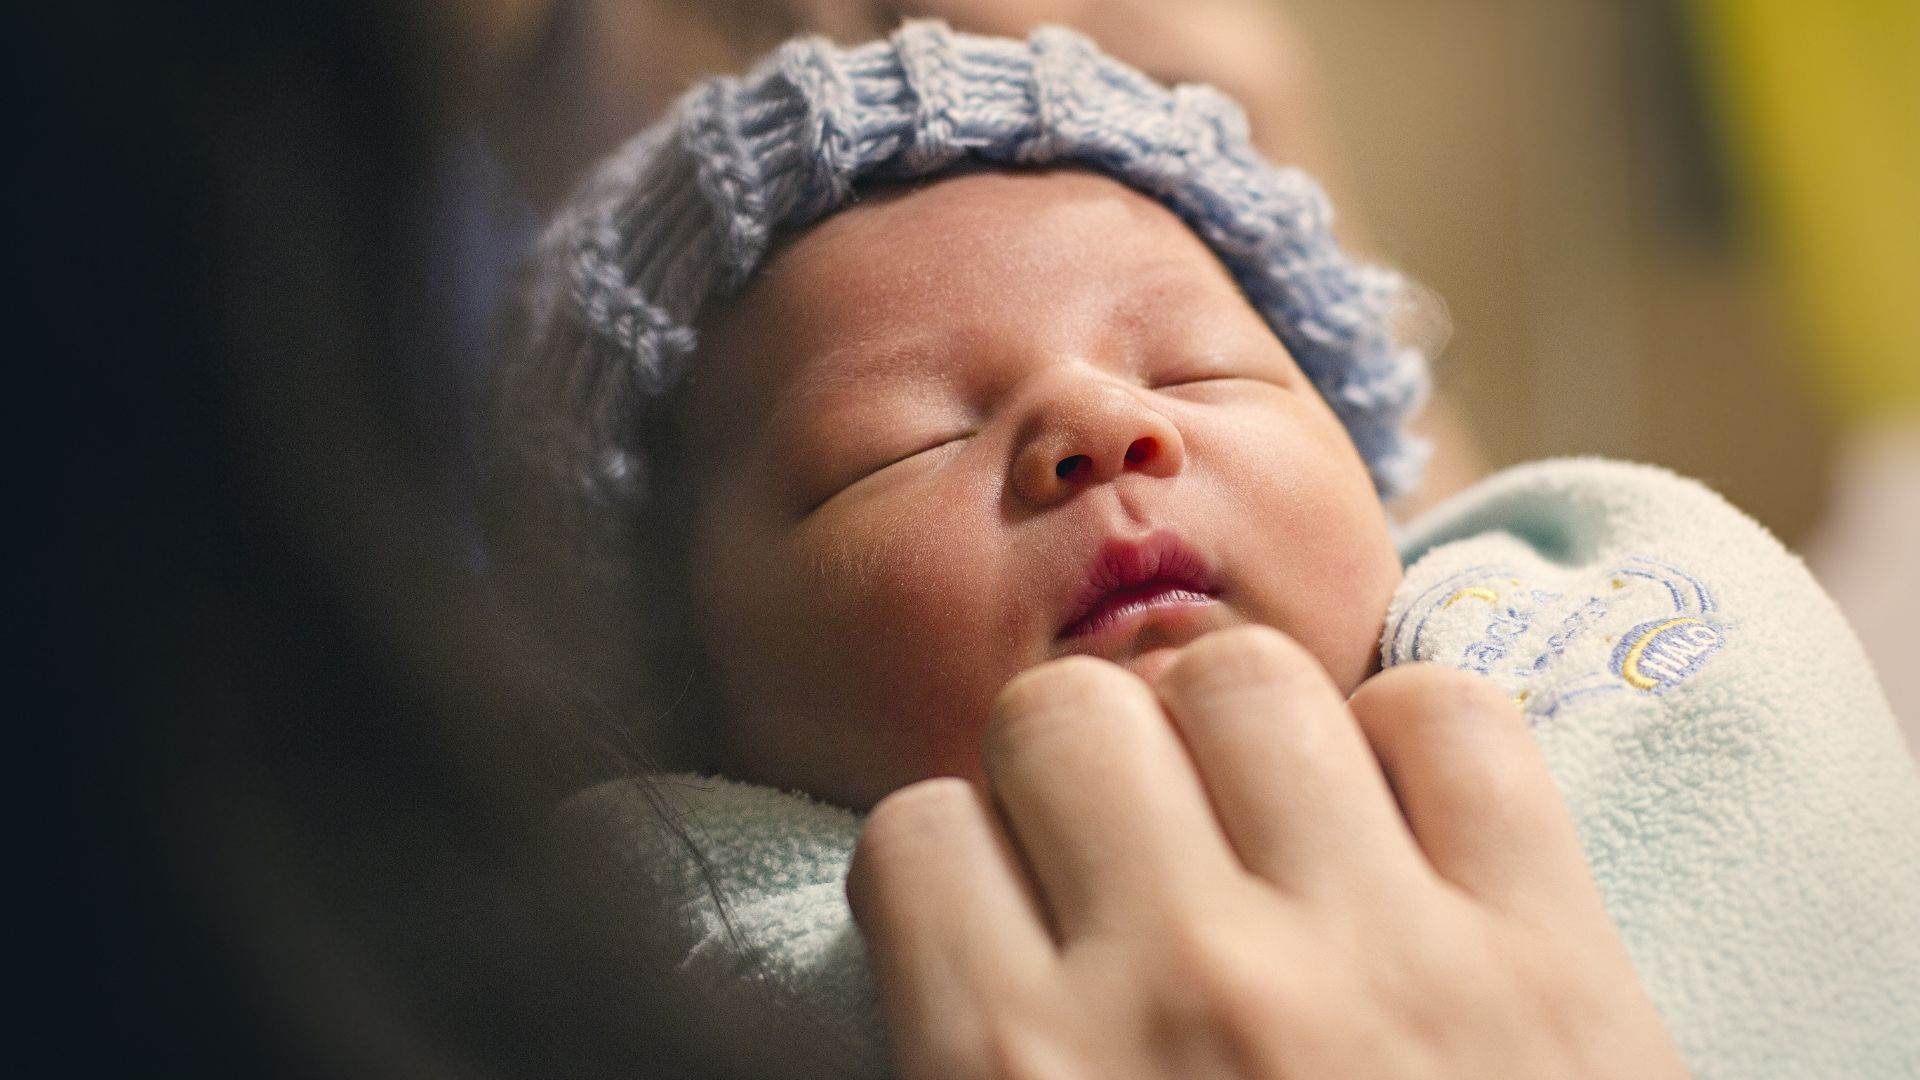 A newborn baby. Image: Canva